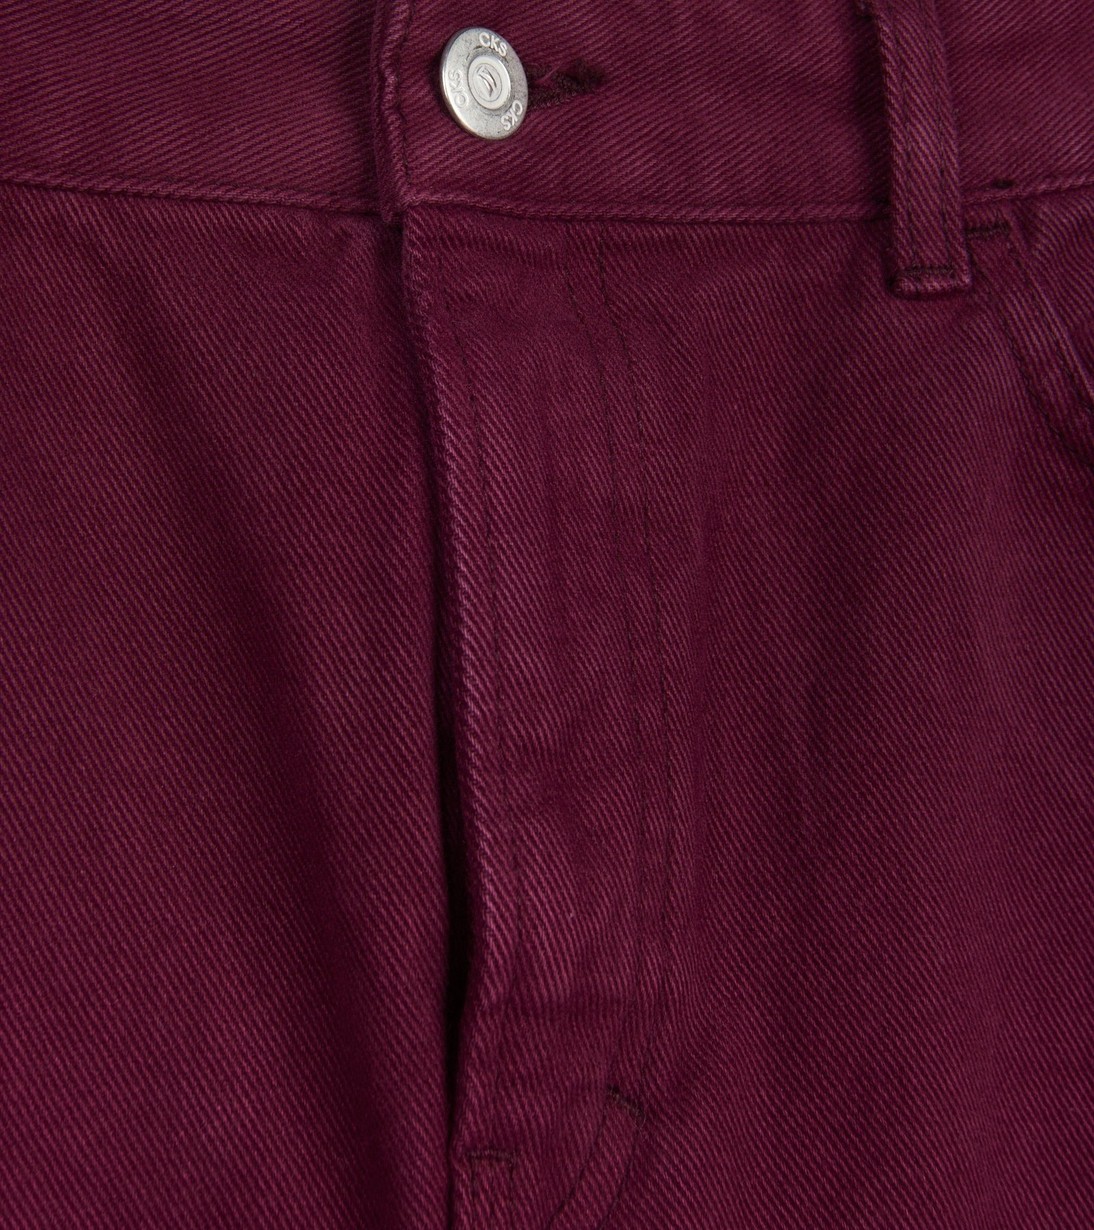 CKS Dames - MYLO - enkel jeans - rood